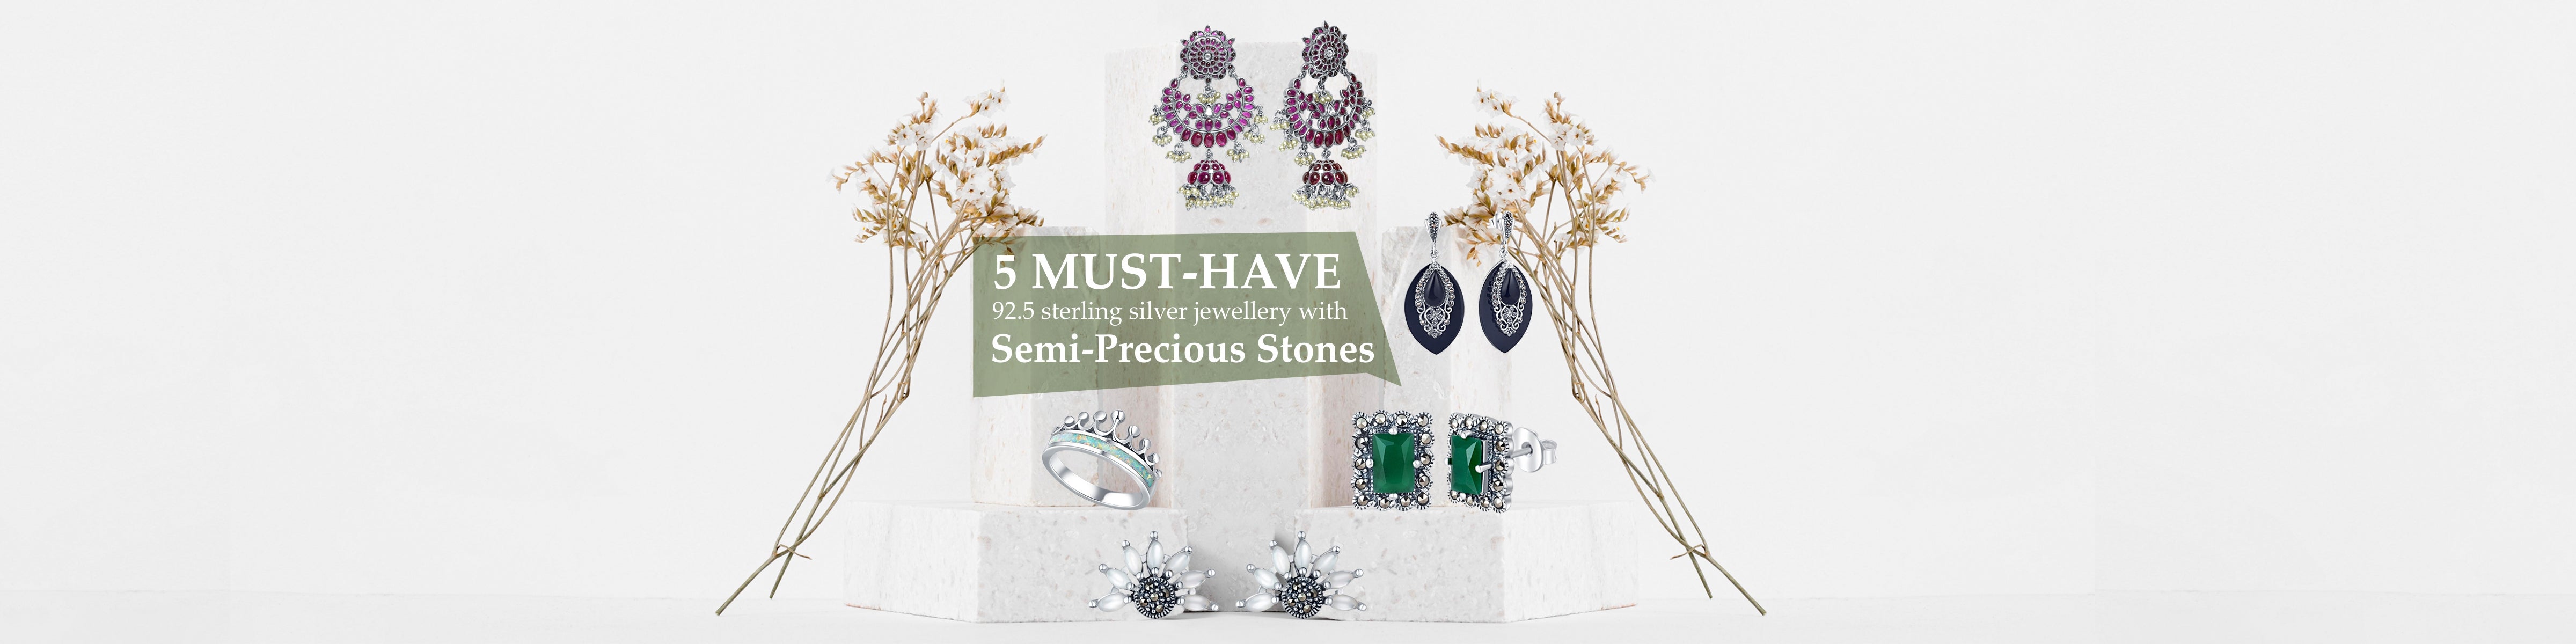 5 Must-Have Raajraani 92.5 Sterling Silver Jewellery with Semi-Precious Stones